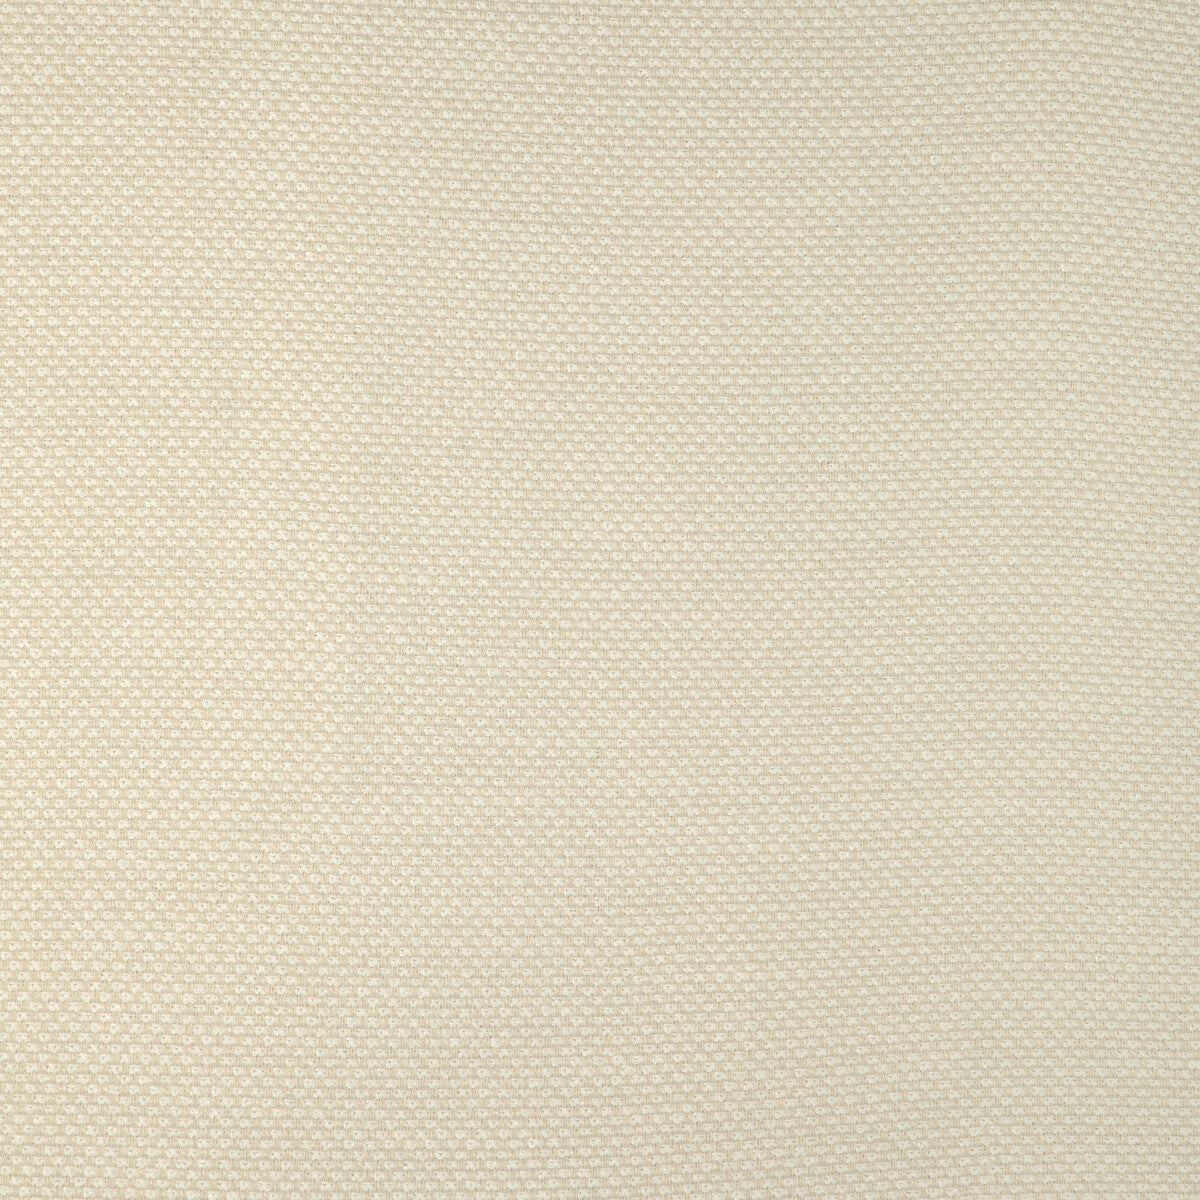 Kravet Smart fabric in 36999-1 color - pattern 36999.1.0 - by Kravet Smart in the Pavilion collection